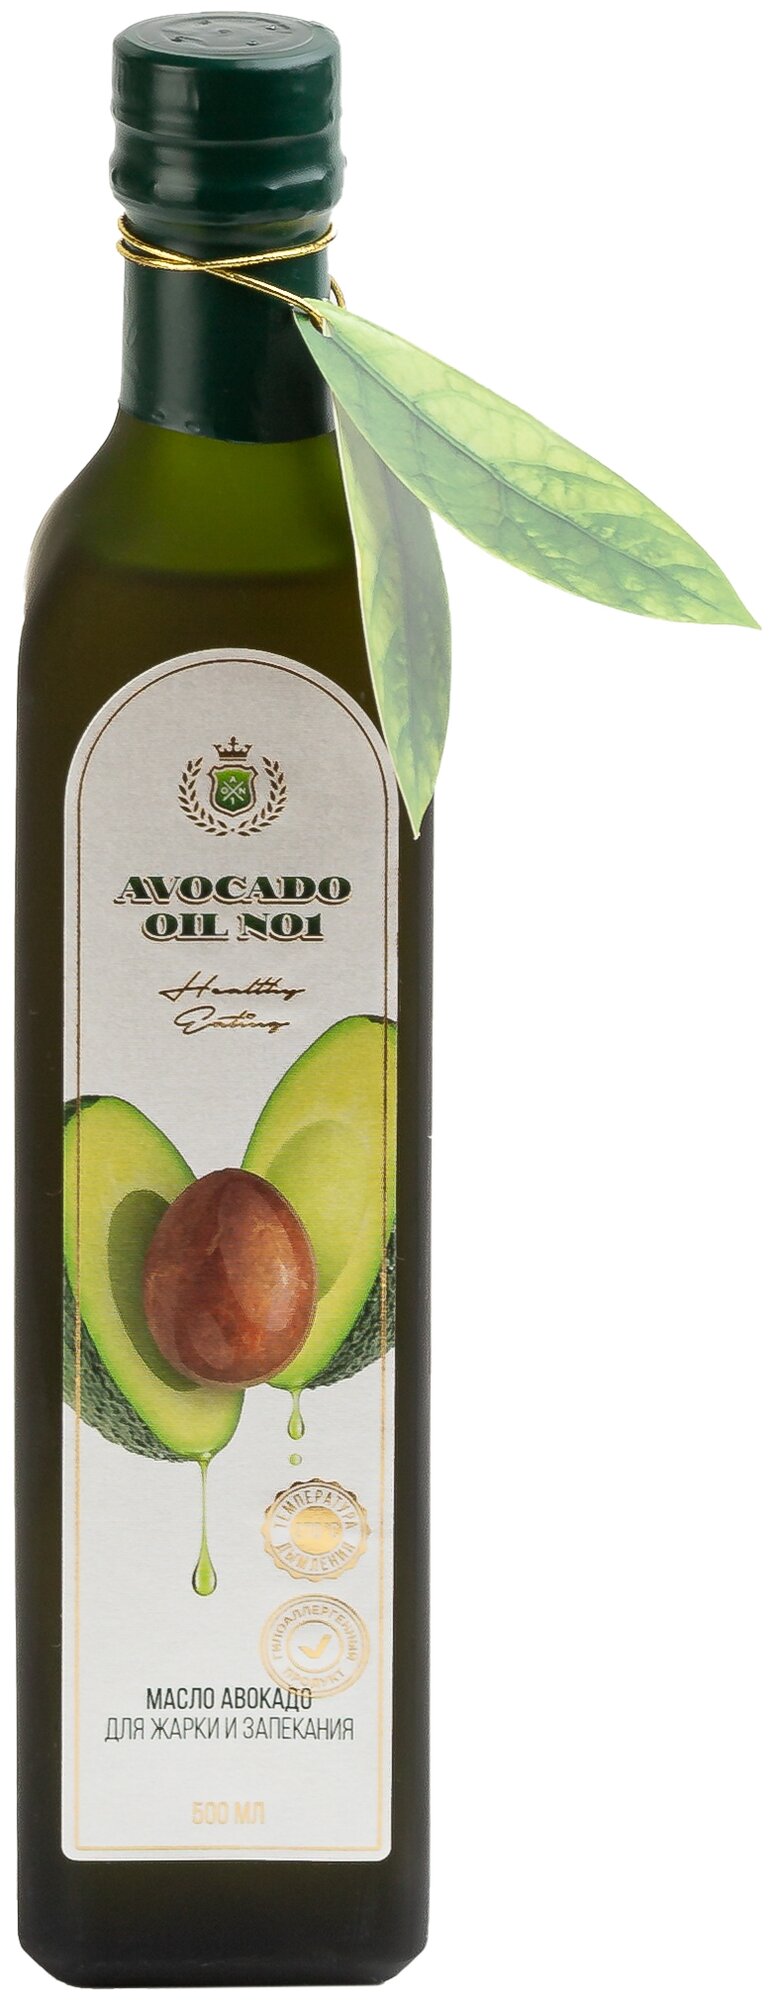 Масло авокадо Avocado oiL №1 рафинированное, 0.5 л